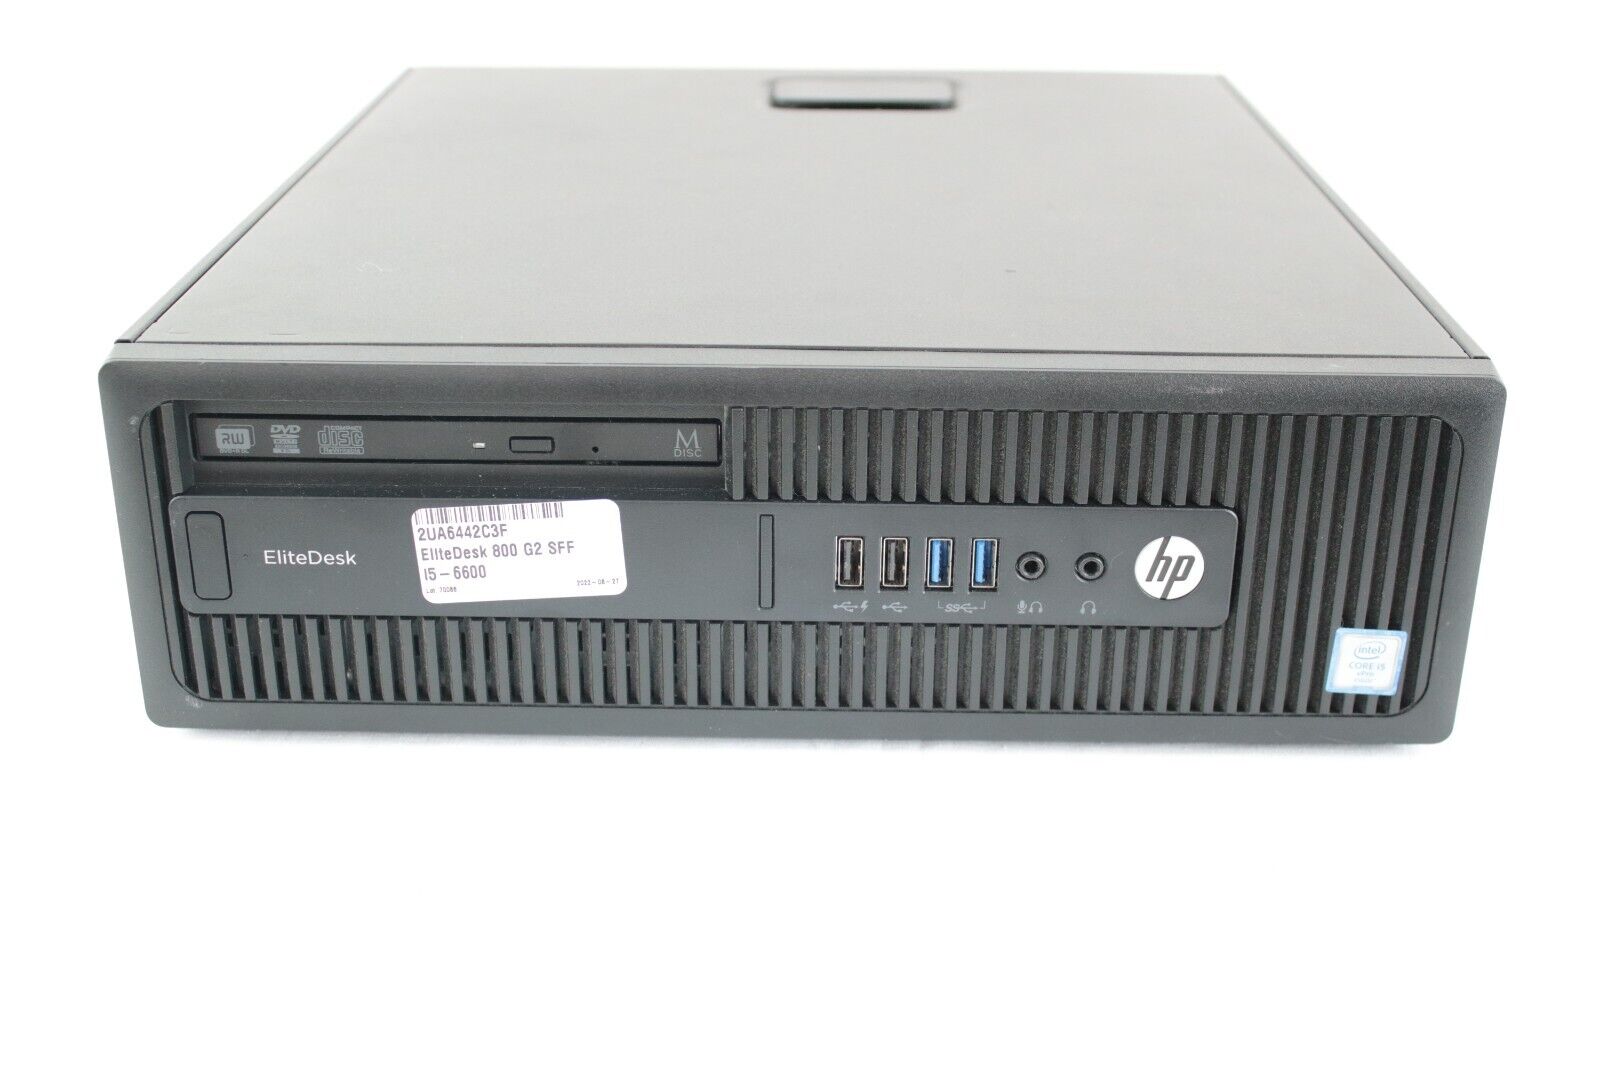 HP EliteDesk 800 G2 w/ Intel Core i5-6600 CPU @ 3.30GHz, 16GB RAM, No HDD or OS